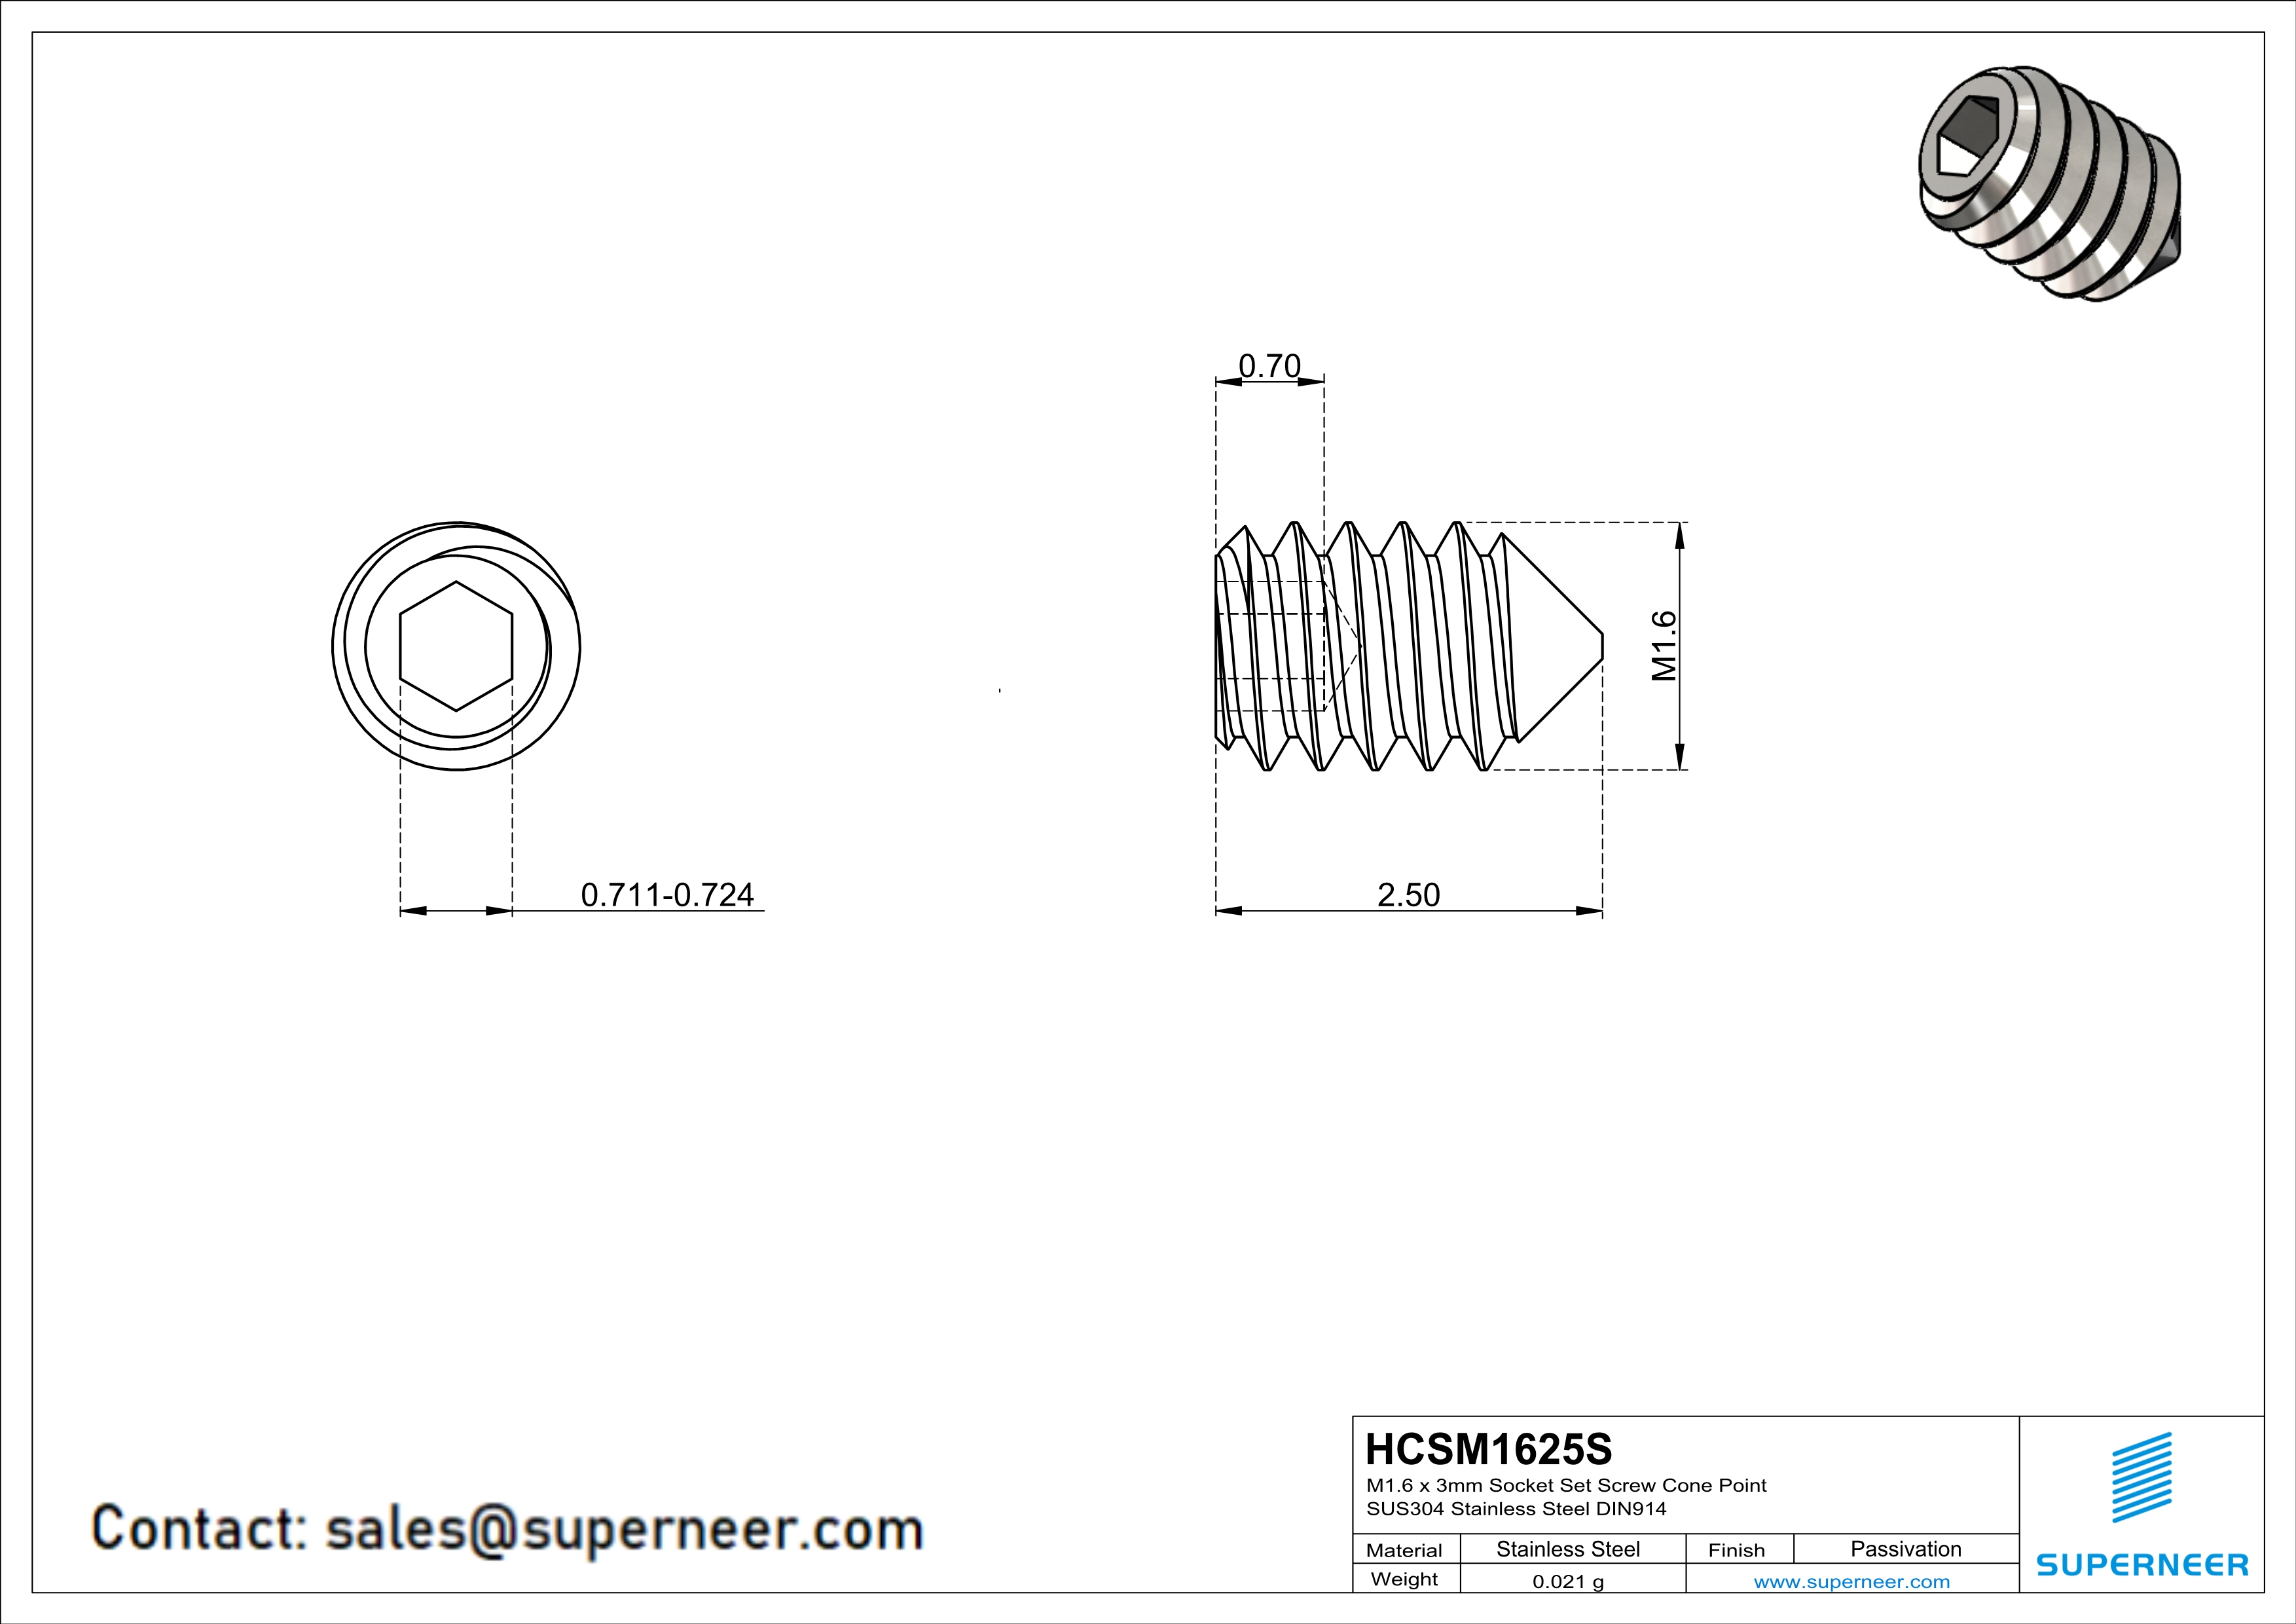 M1.6 x 2.5mm Socket Set Screw Cone Point SUS304 Stainless Steel Inox DIN914